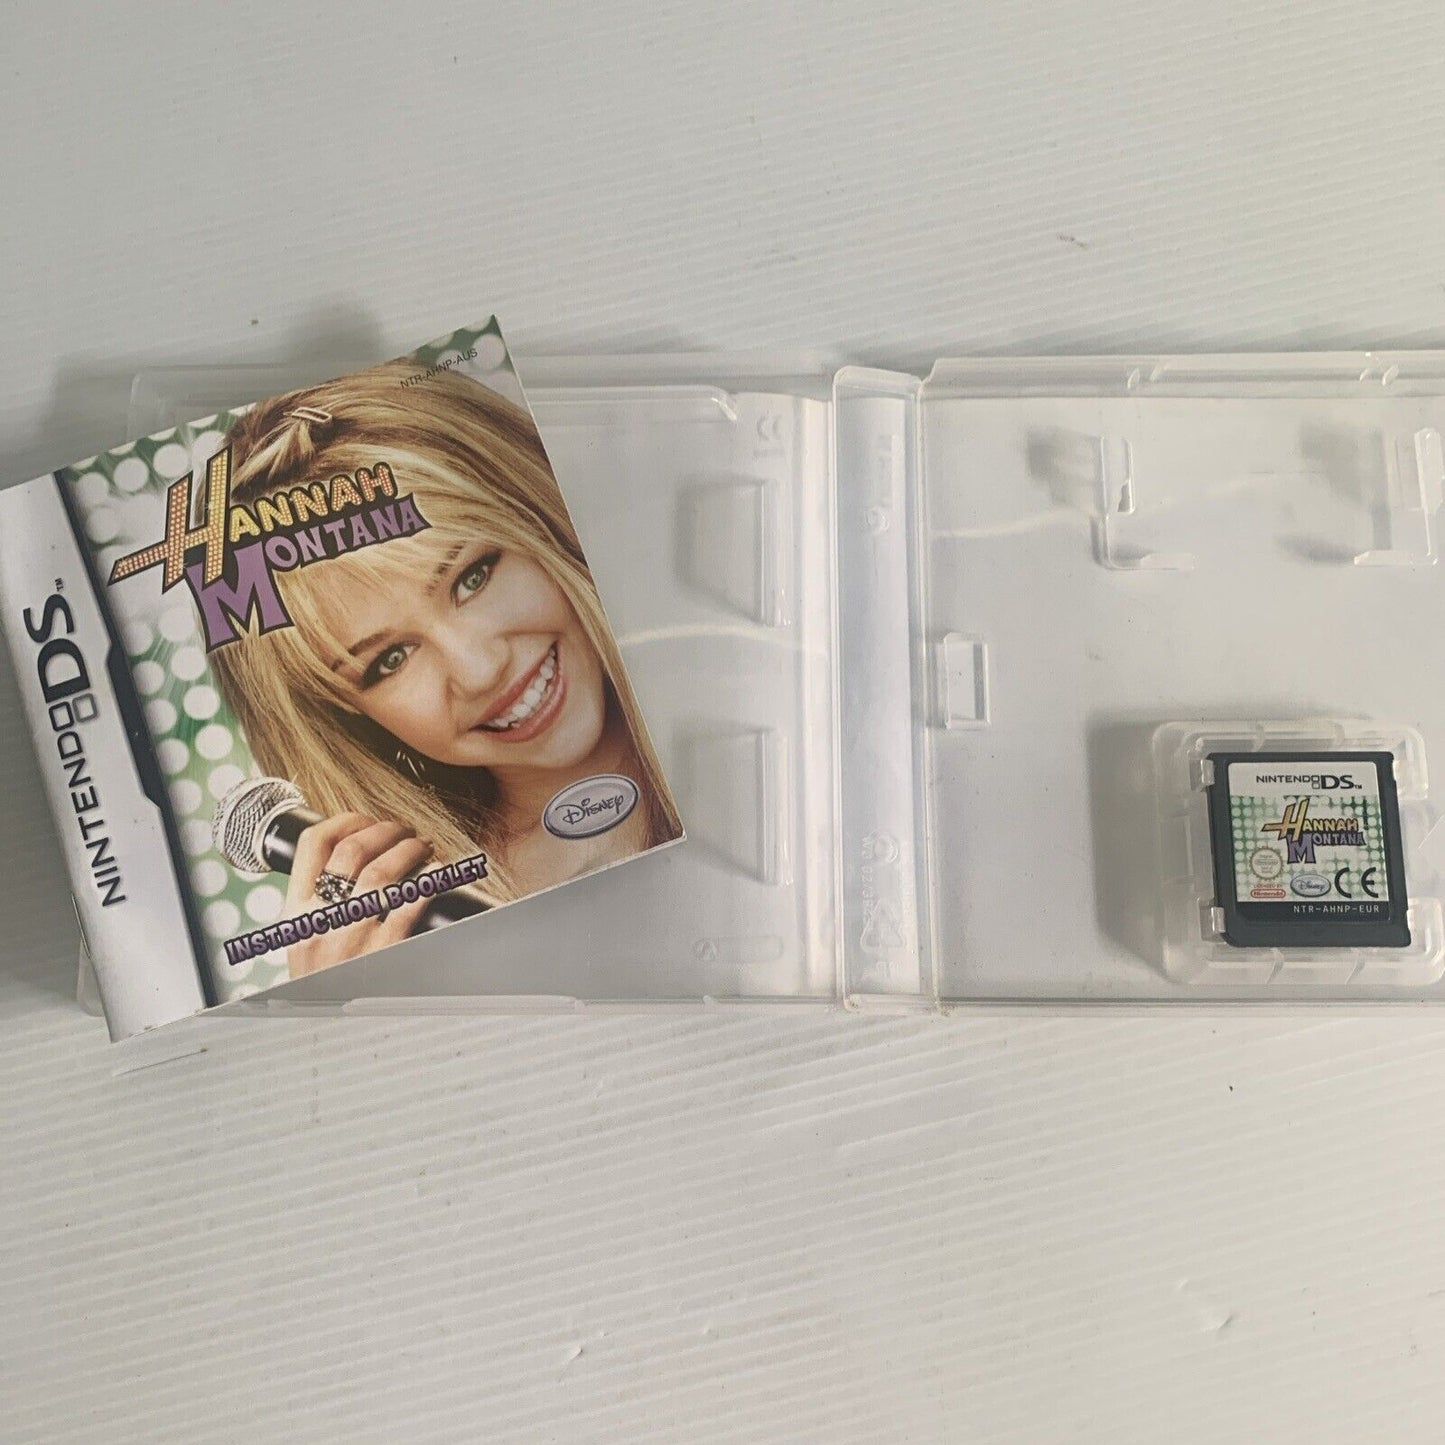 Hannah Montana Nintendo DS Game